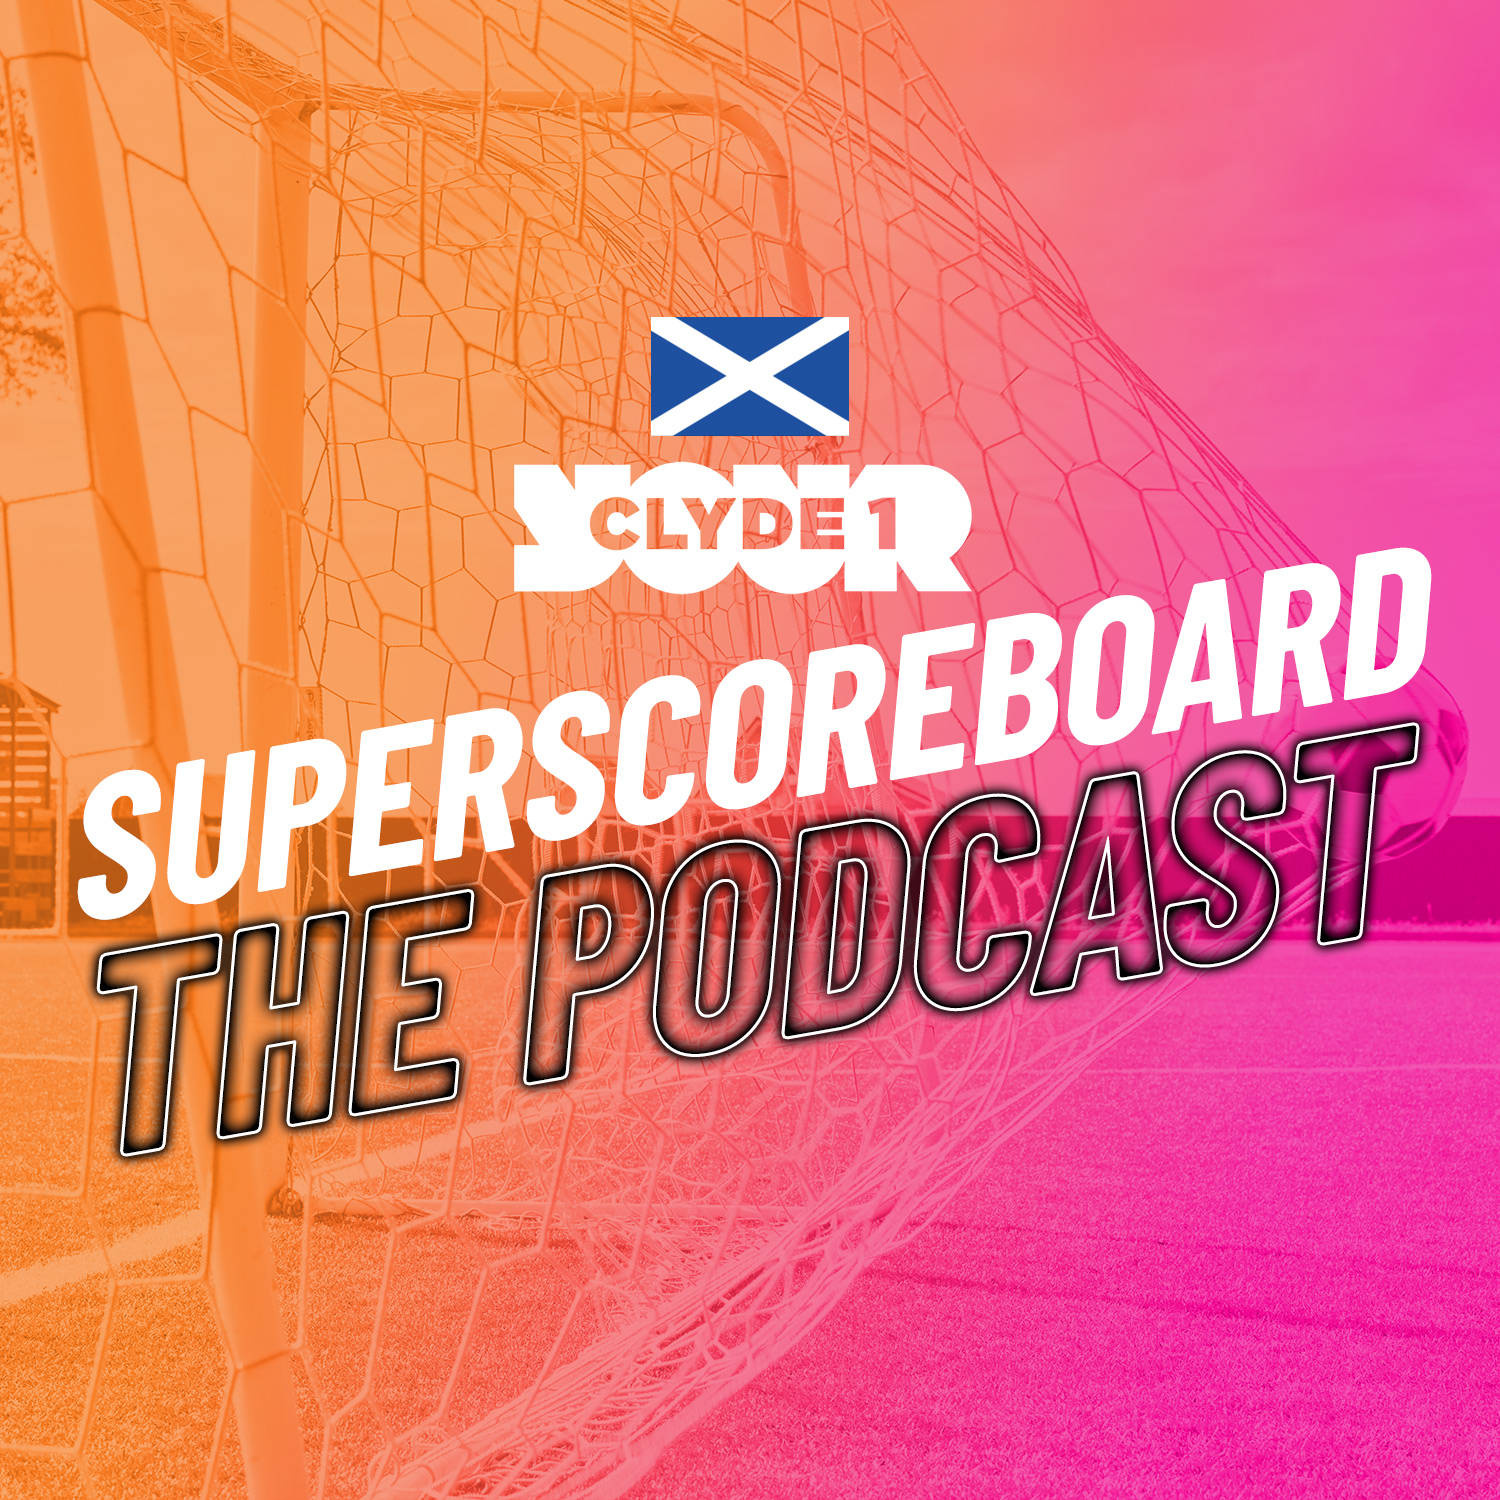 Monday 4th December Clyde 1 Superscoreboard